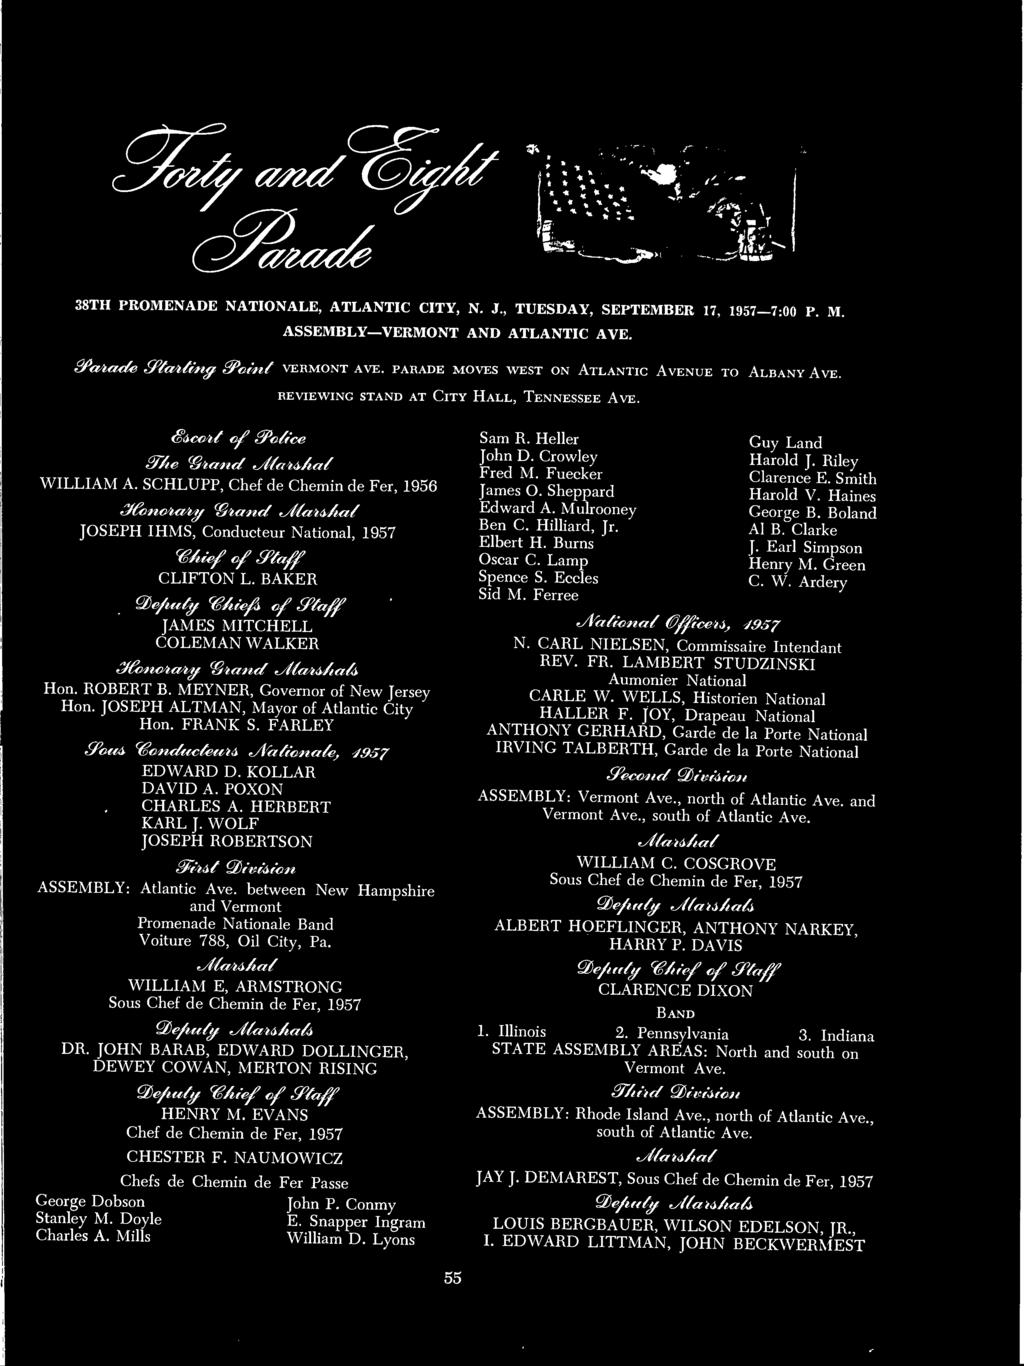 SCHLUPP, Chef de Chemin de Fer, 1956 'y&iricla'iy ylysiiaatsiy JOSEPH IHMS, Conducteur National, 1957 ^4^ PPYaffl CLIFTON L. BAKER YoAiiefe YAYaffl JAMES MITCHELL COLEMAN WALKER Hon. ROBERT B.